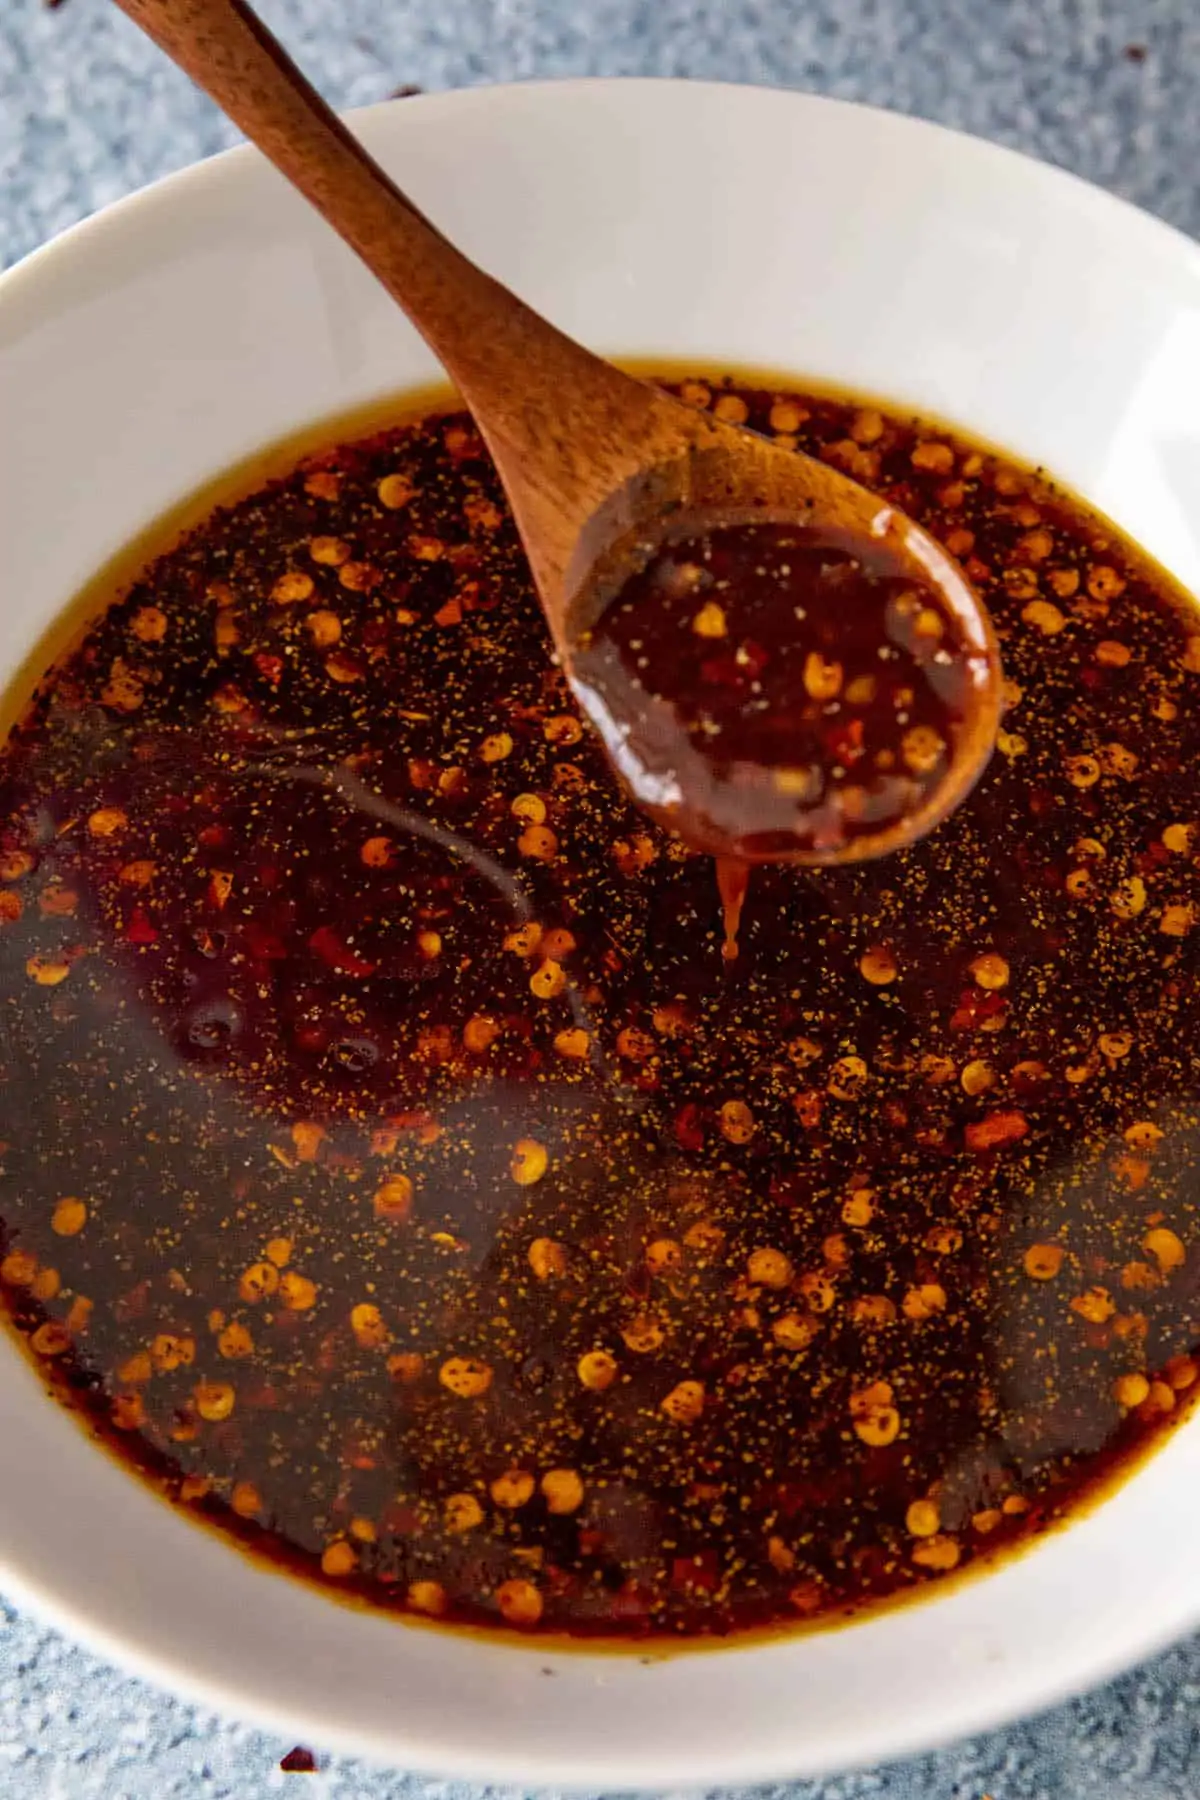 Bulgogi Sauce dripping from a spoon